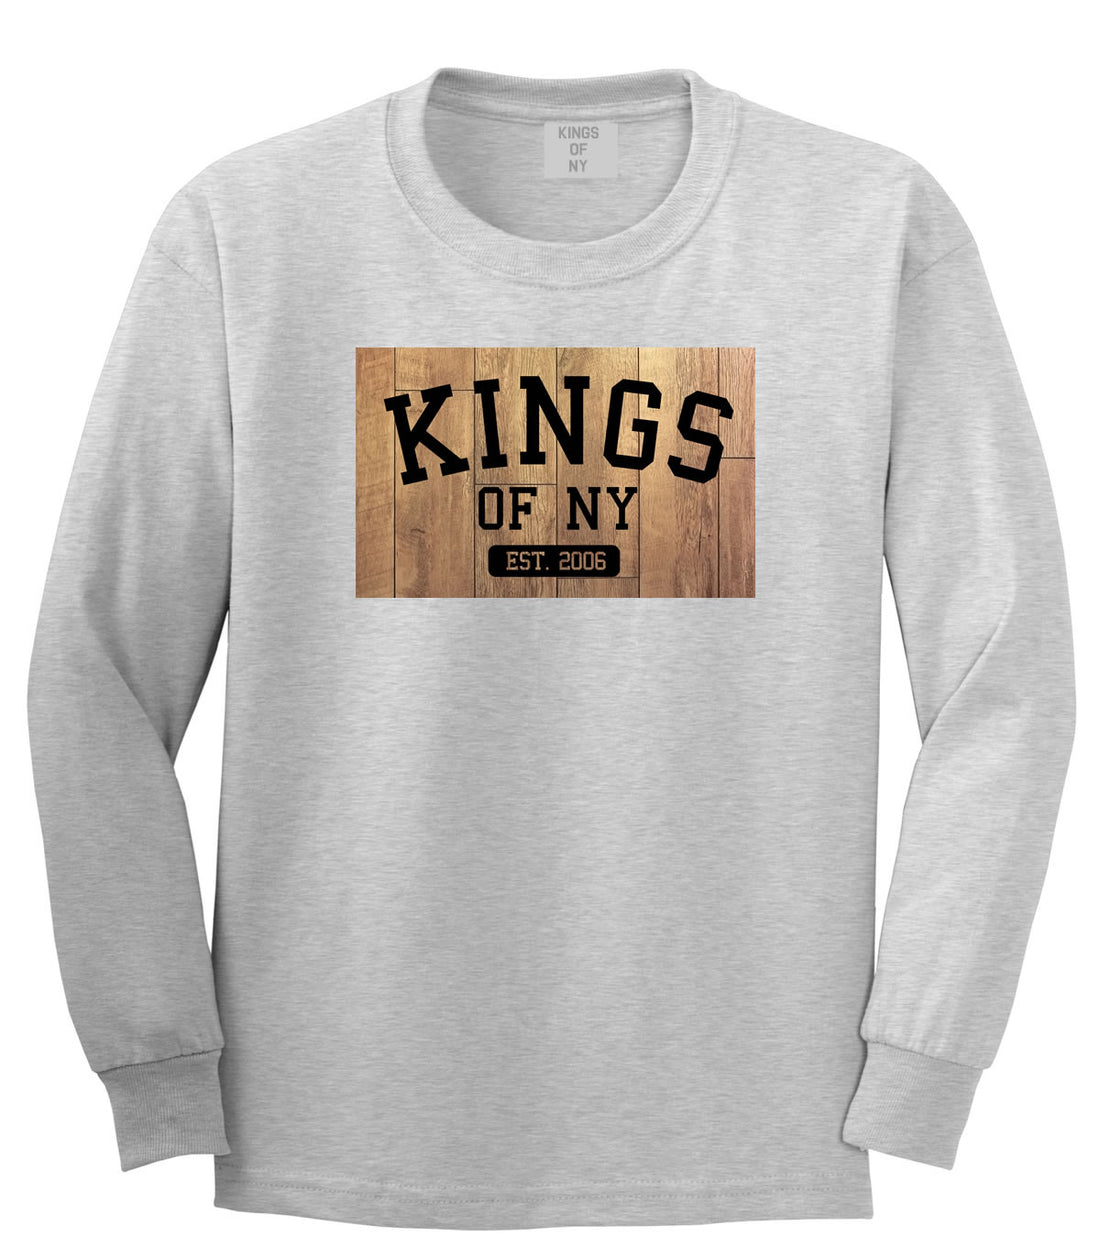 Hardwood Basketball Logo Boys Kids Long Sleeve T-Shirt in Grey by Kings Of NY